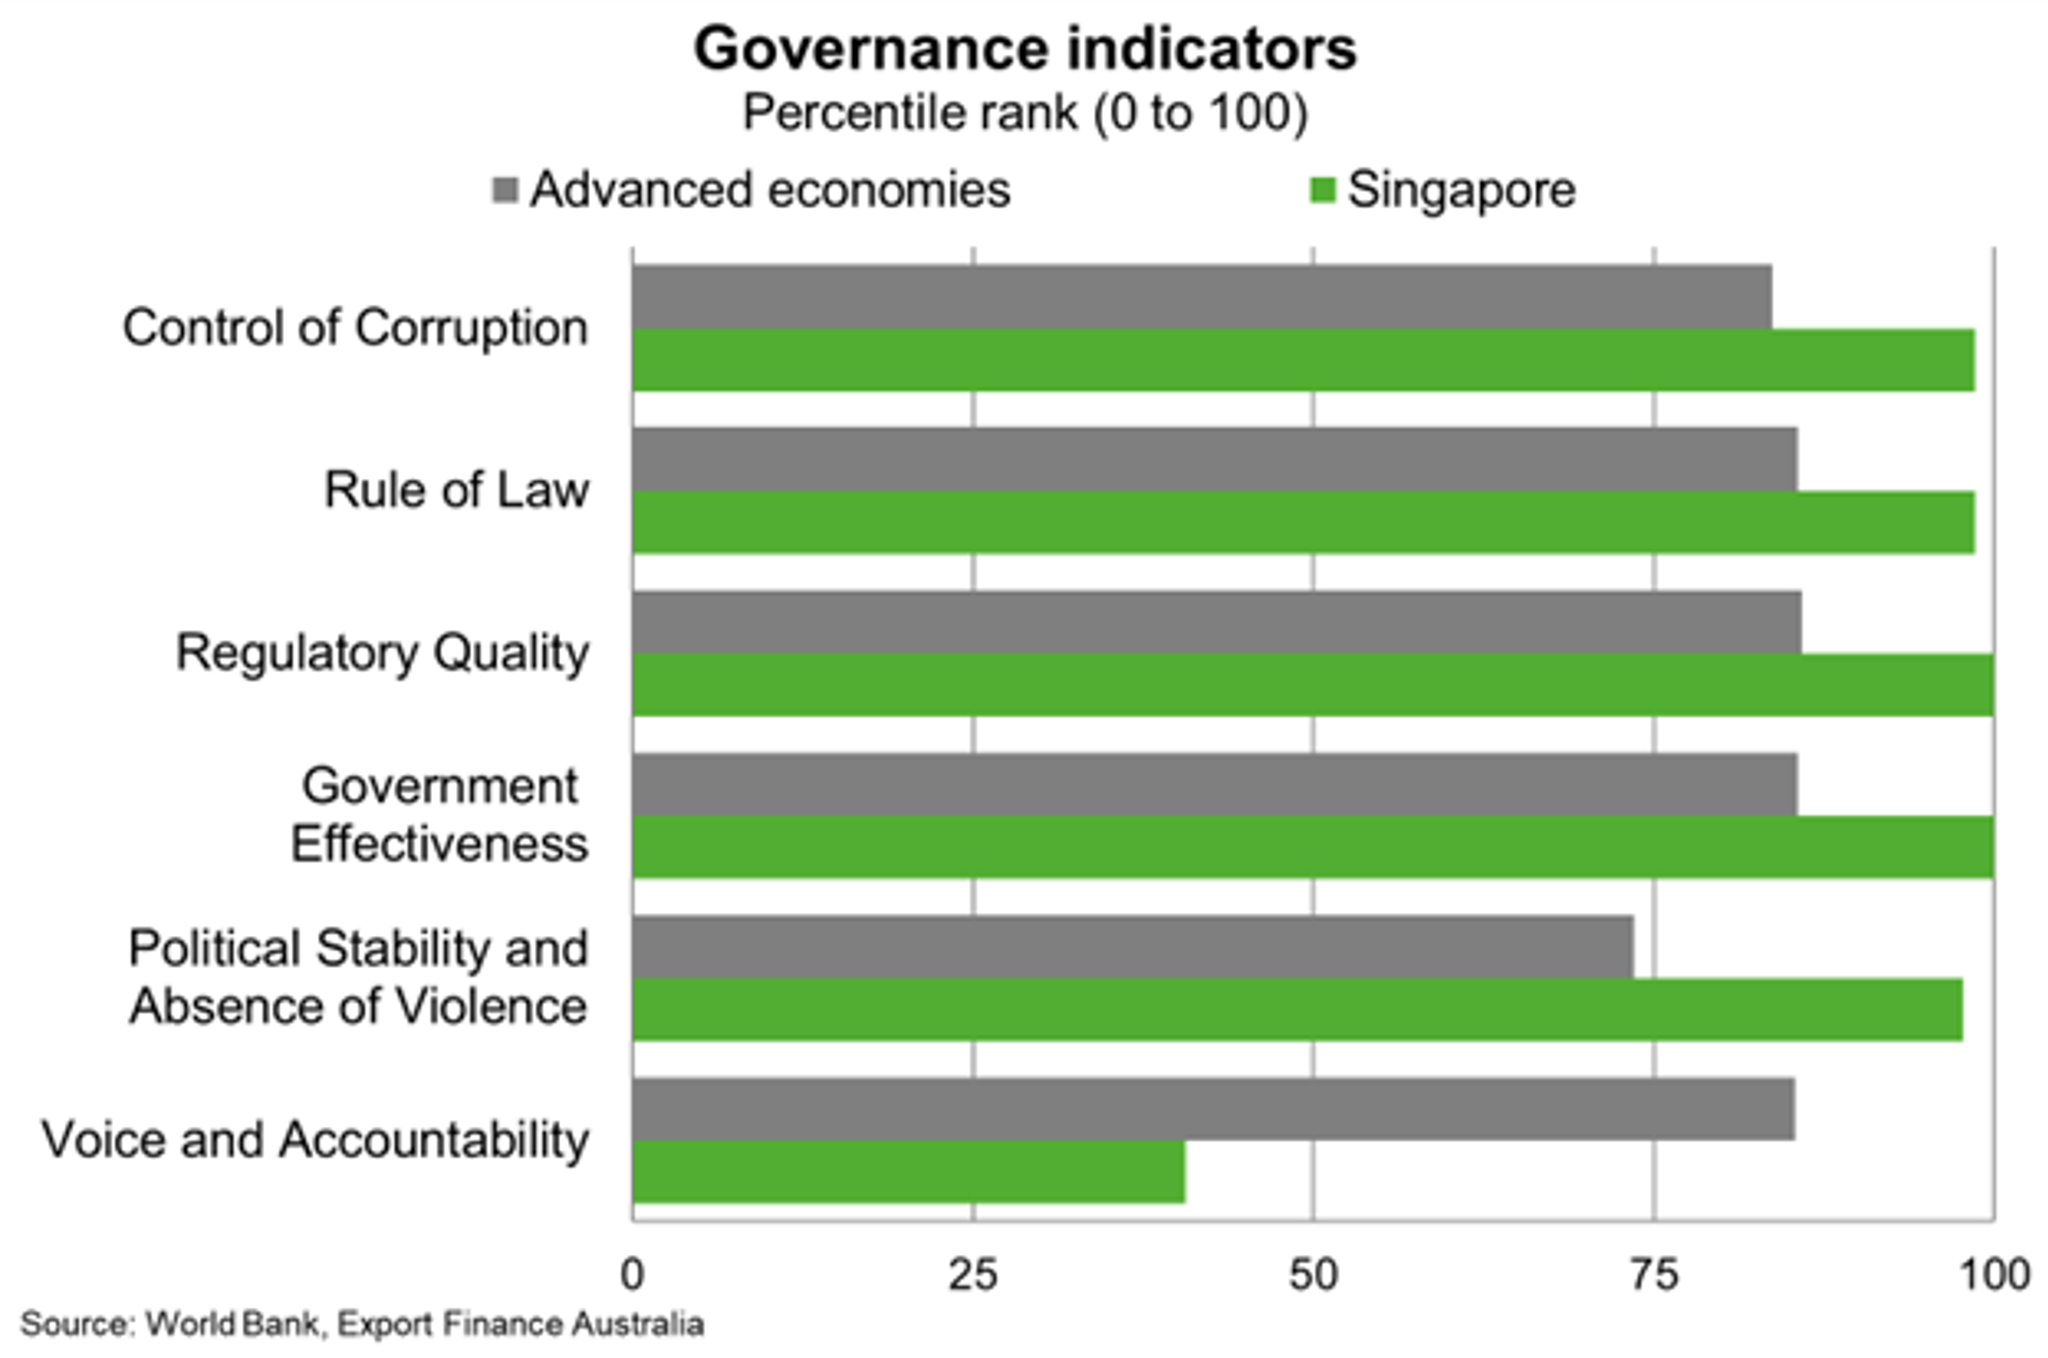 Governance Indicators (Percentile)